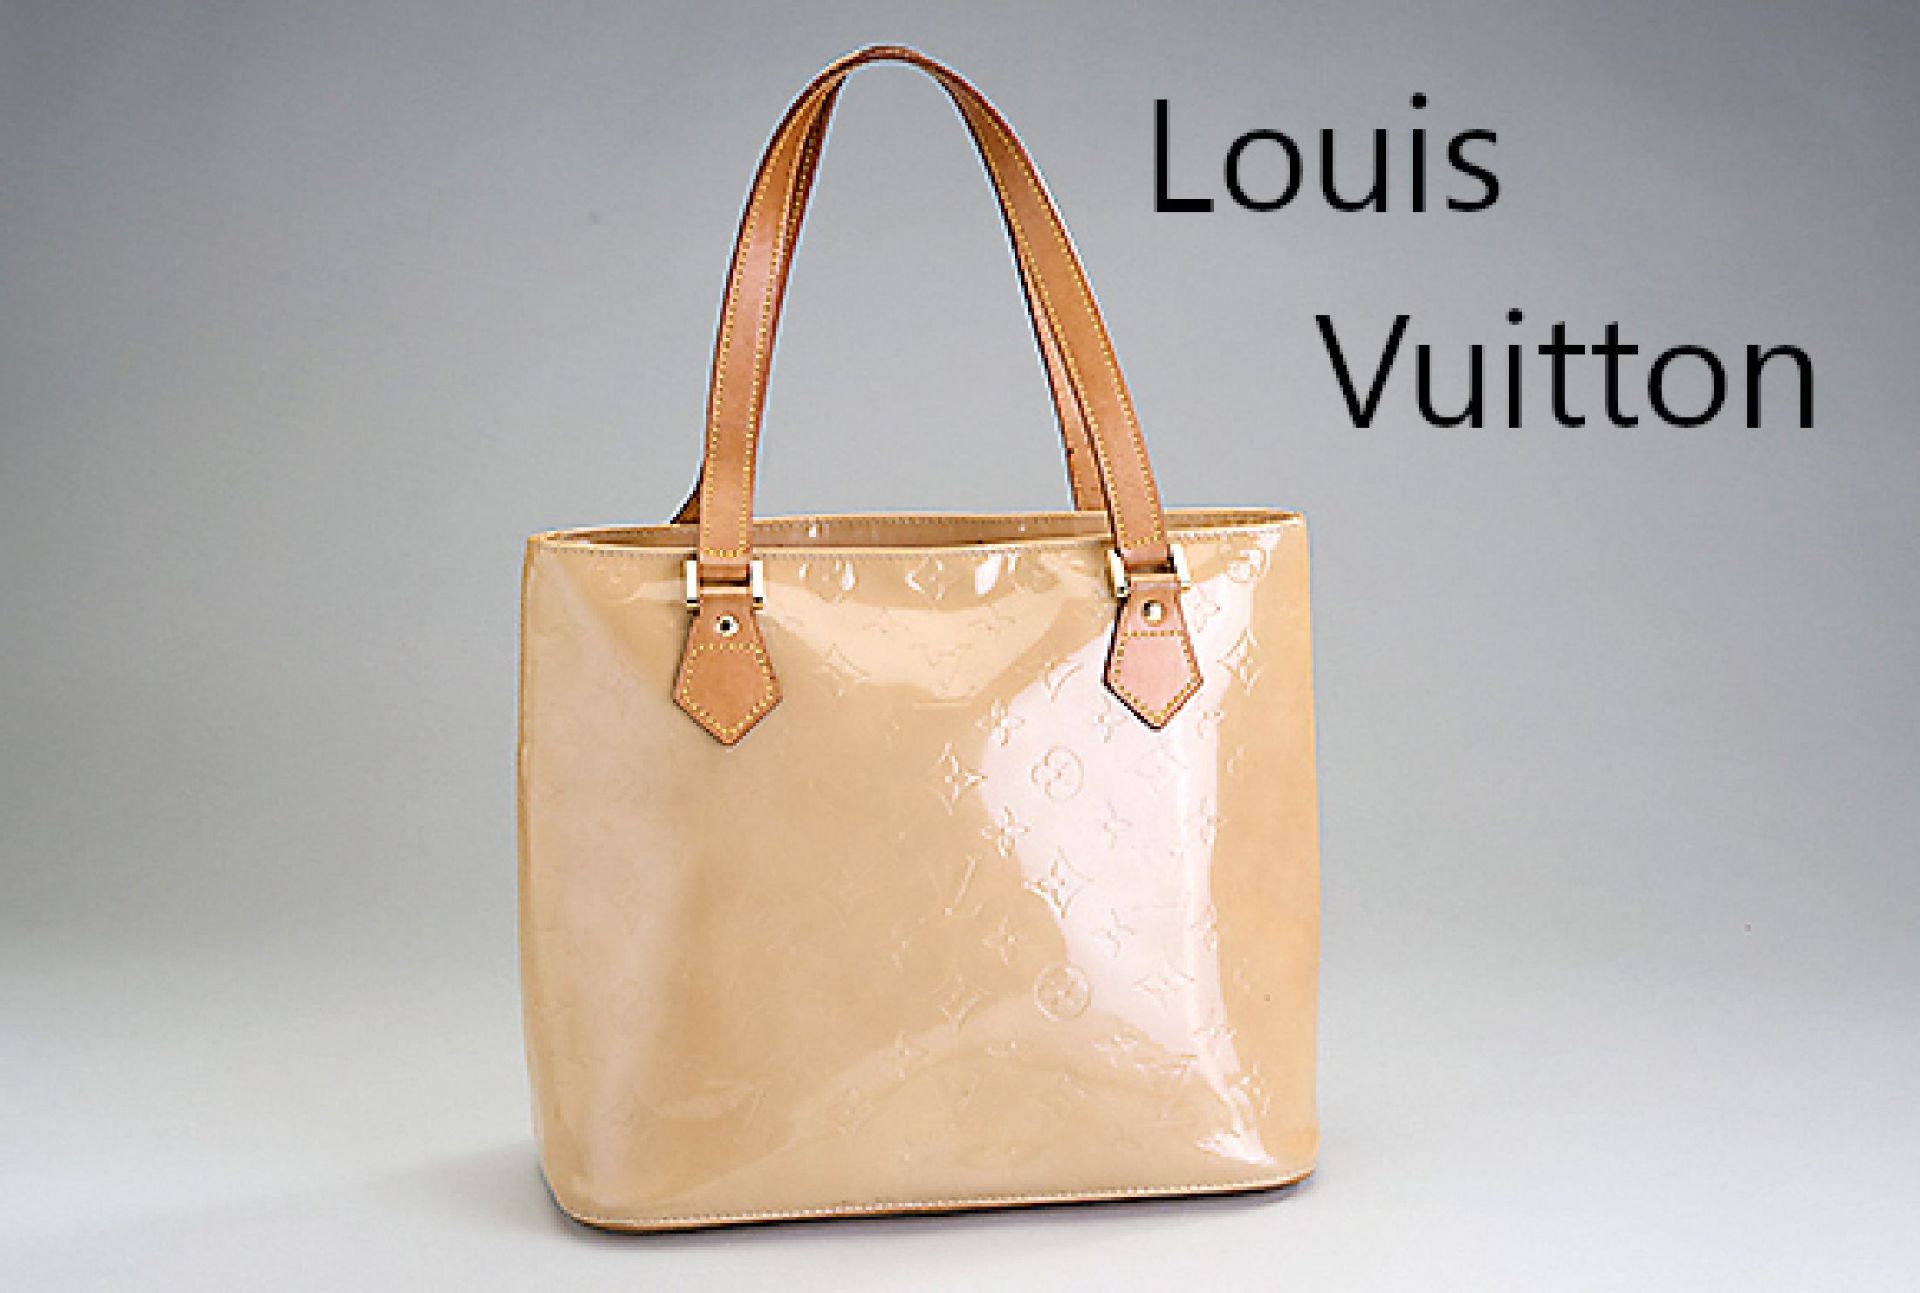 LOUIS VUITTON Handtasche,   cremefarb. VernisLeder, Modell